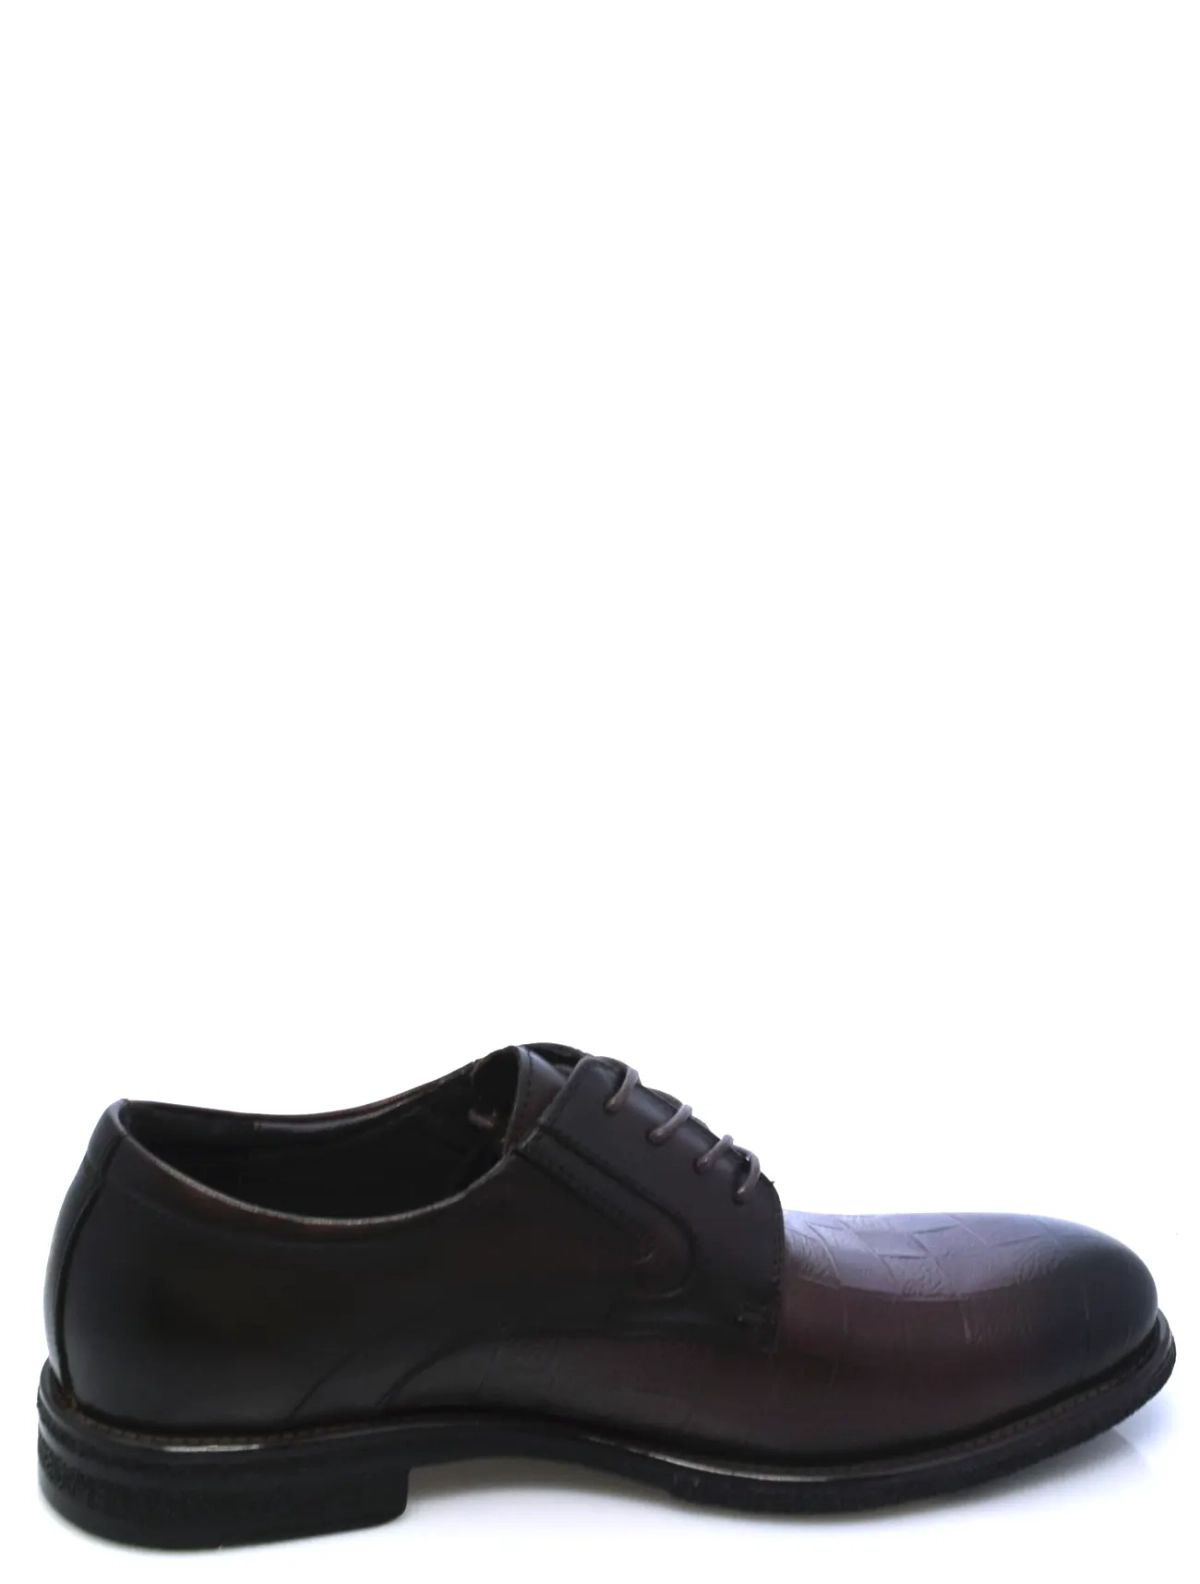 Roscote B23-5Y-HB2-T4788 мужские туфли